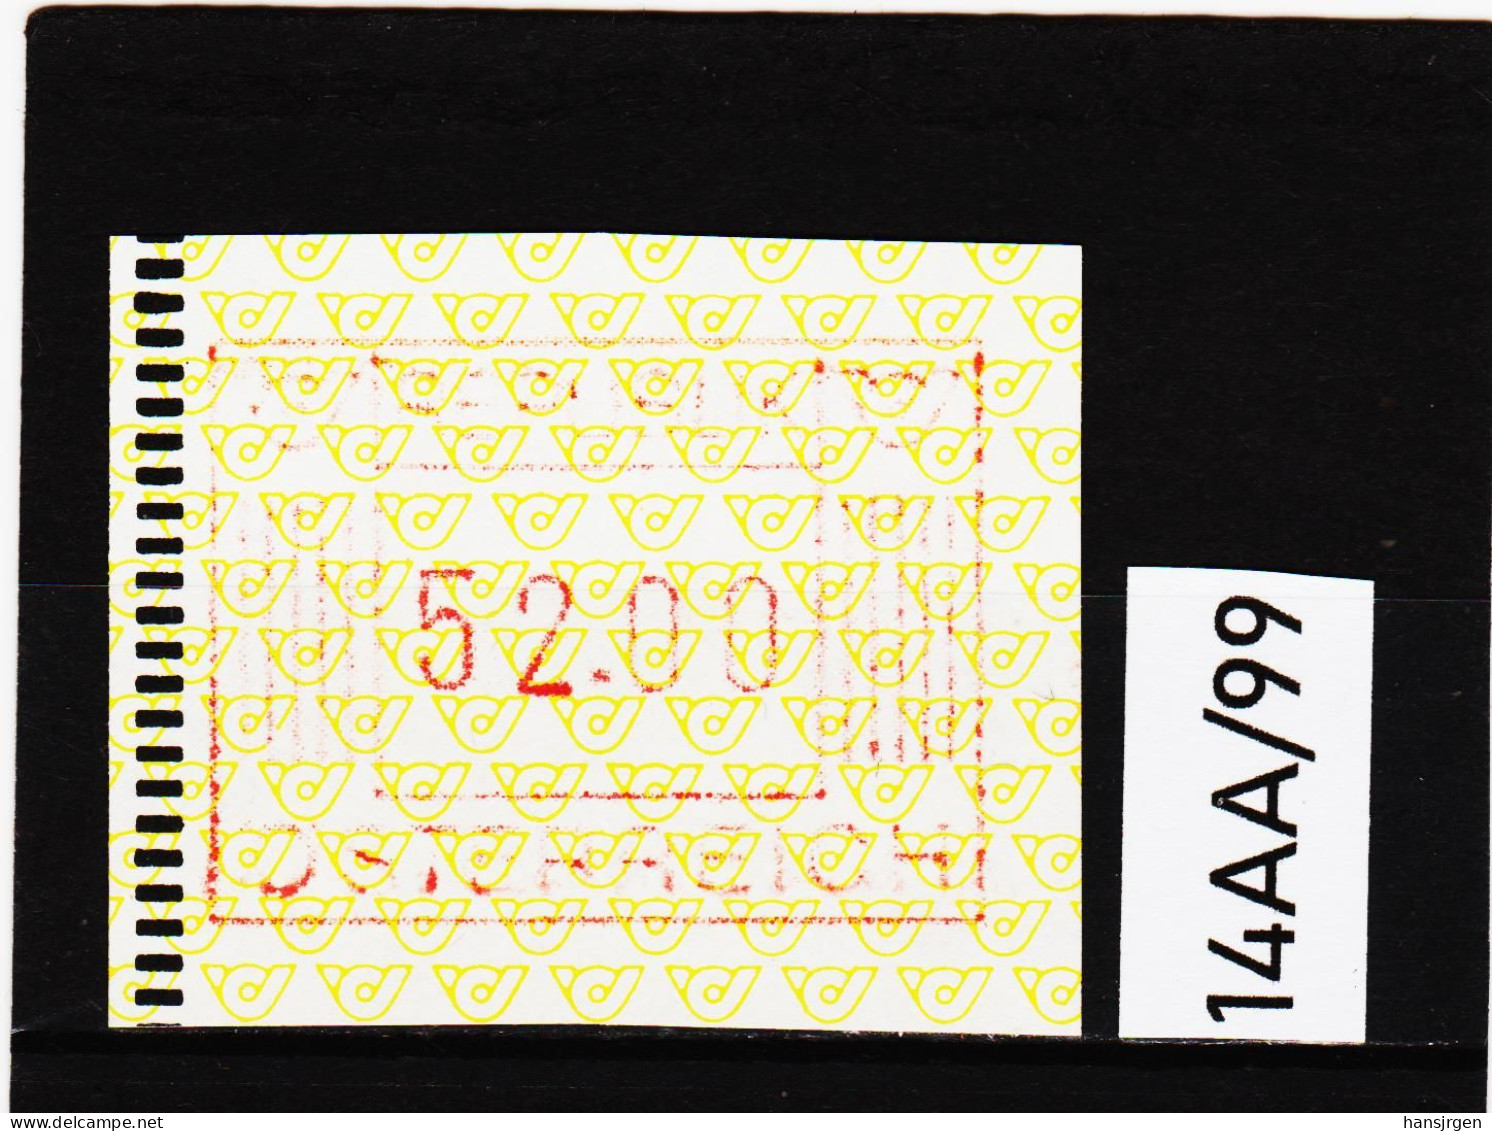 14AA/99  ÖSTERREICH 1983 AUTOMATENMARKEN 1. AUSGABE  52,00 SCHILLING   ** Postfrisch - Timbres De Distributeurs [ATM]